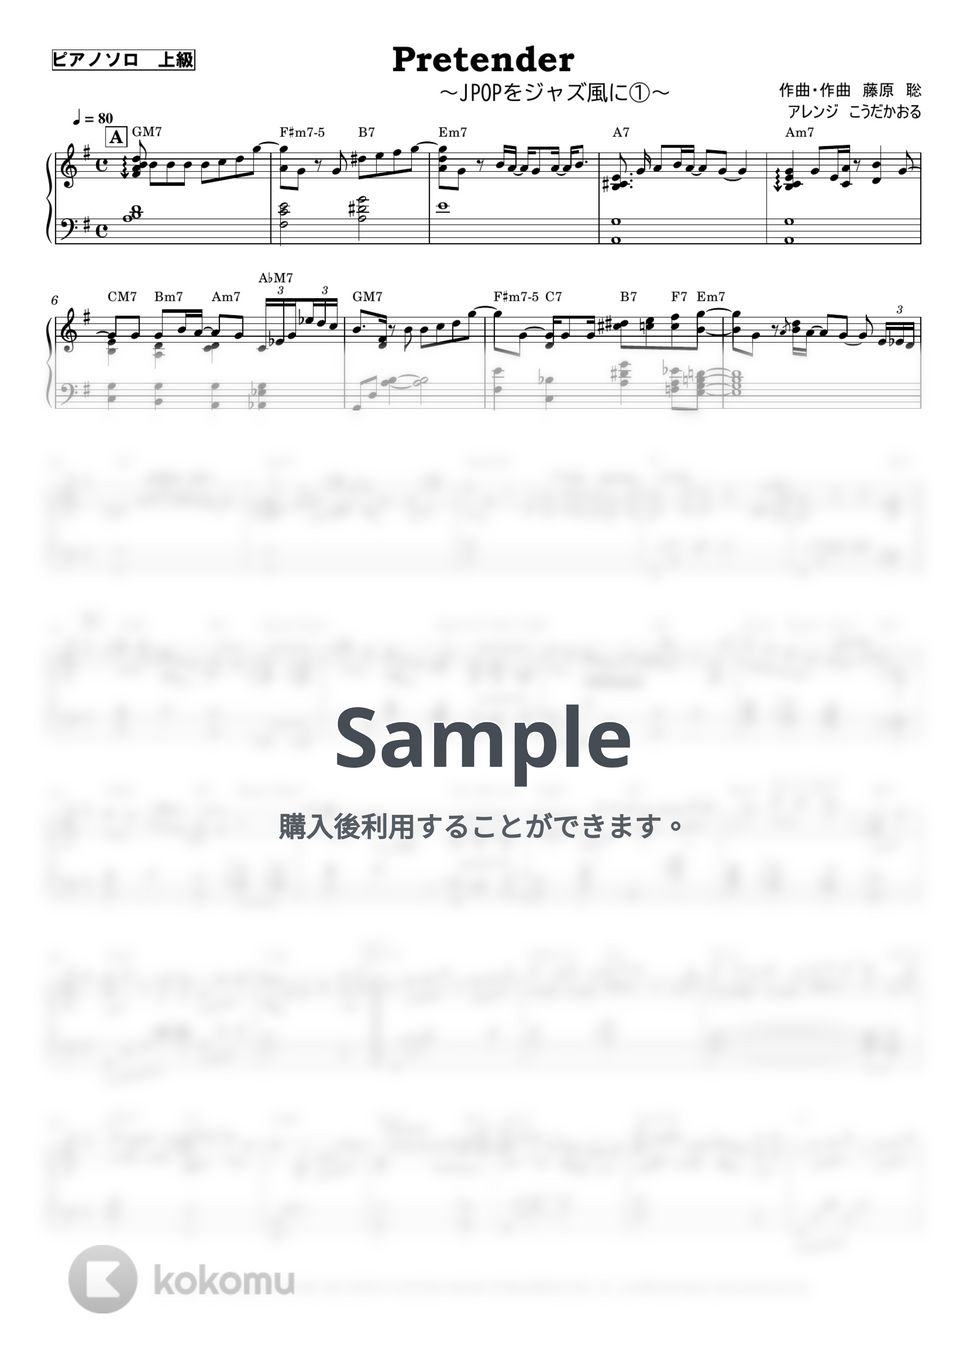 Official髭男dism - Pretender～JPOPをジャズ風に/上級 (ピアノソロ/ジャズ風/) by こうだかおる